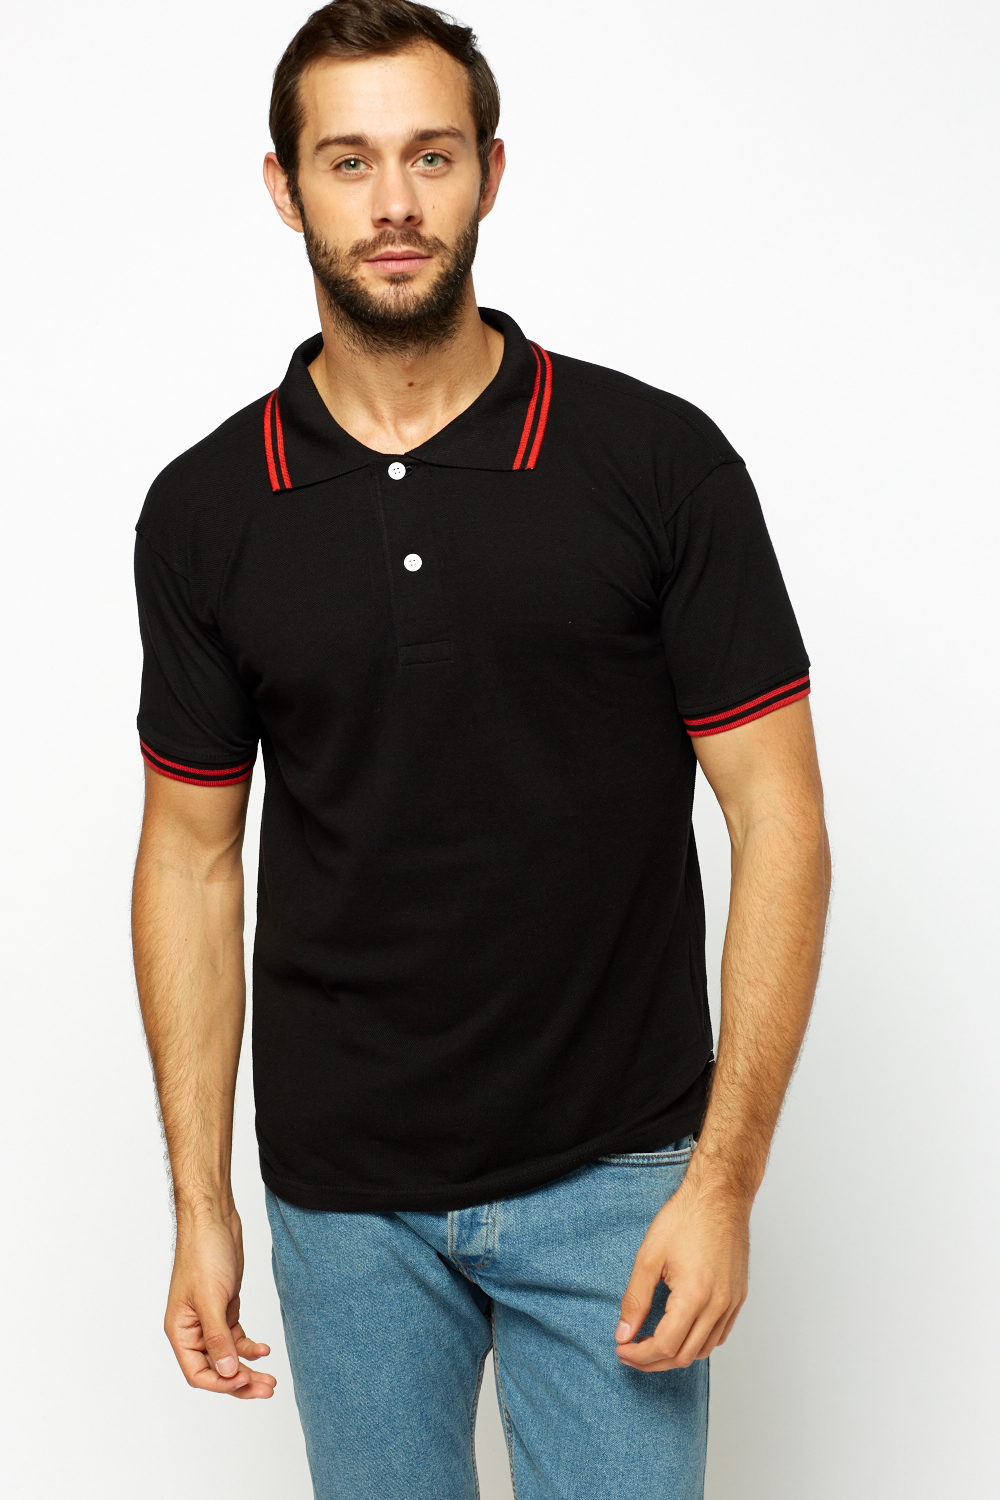 Black Polo T-Shirt - Just $7